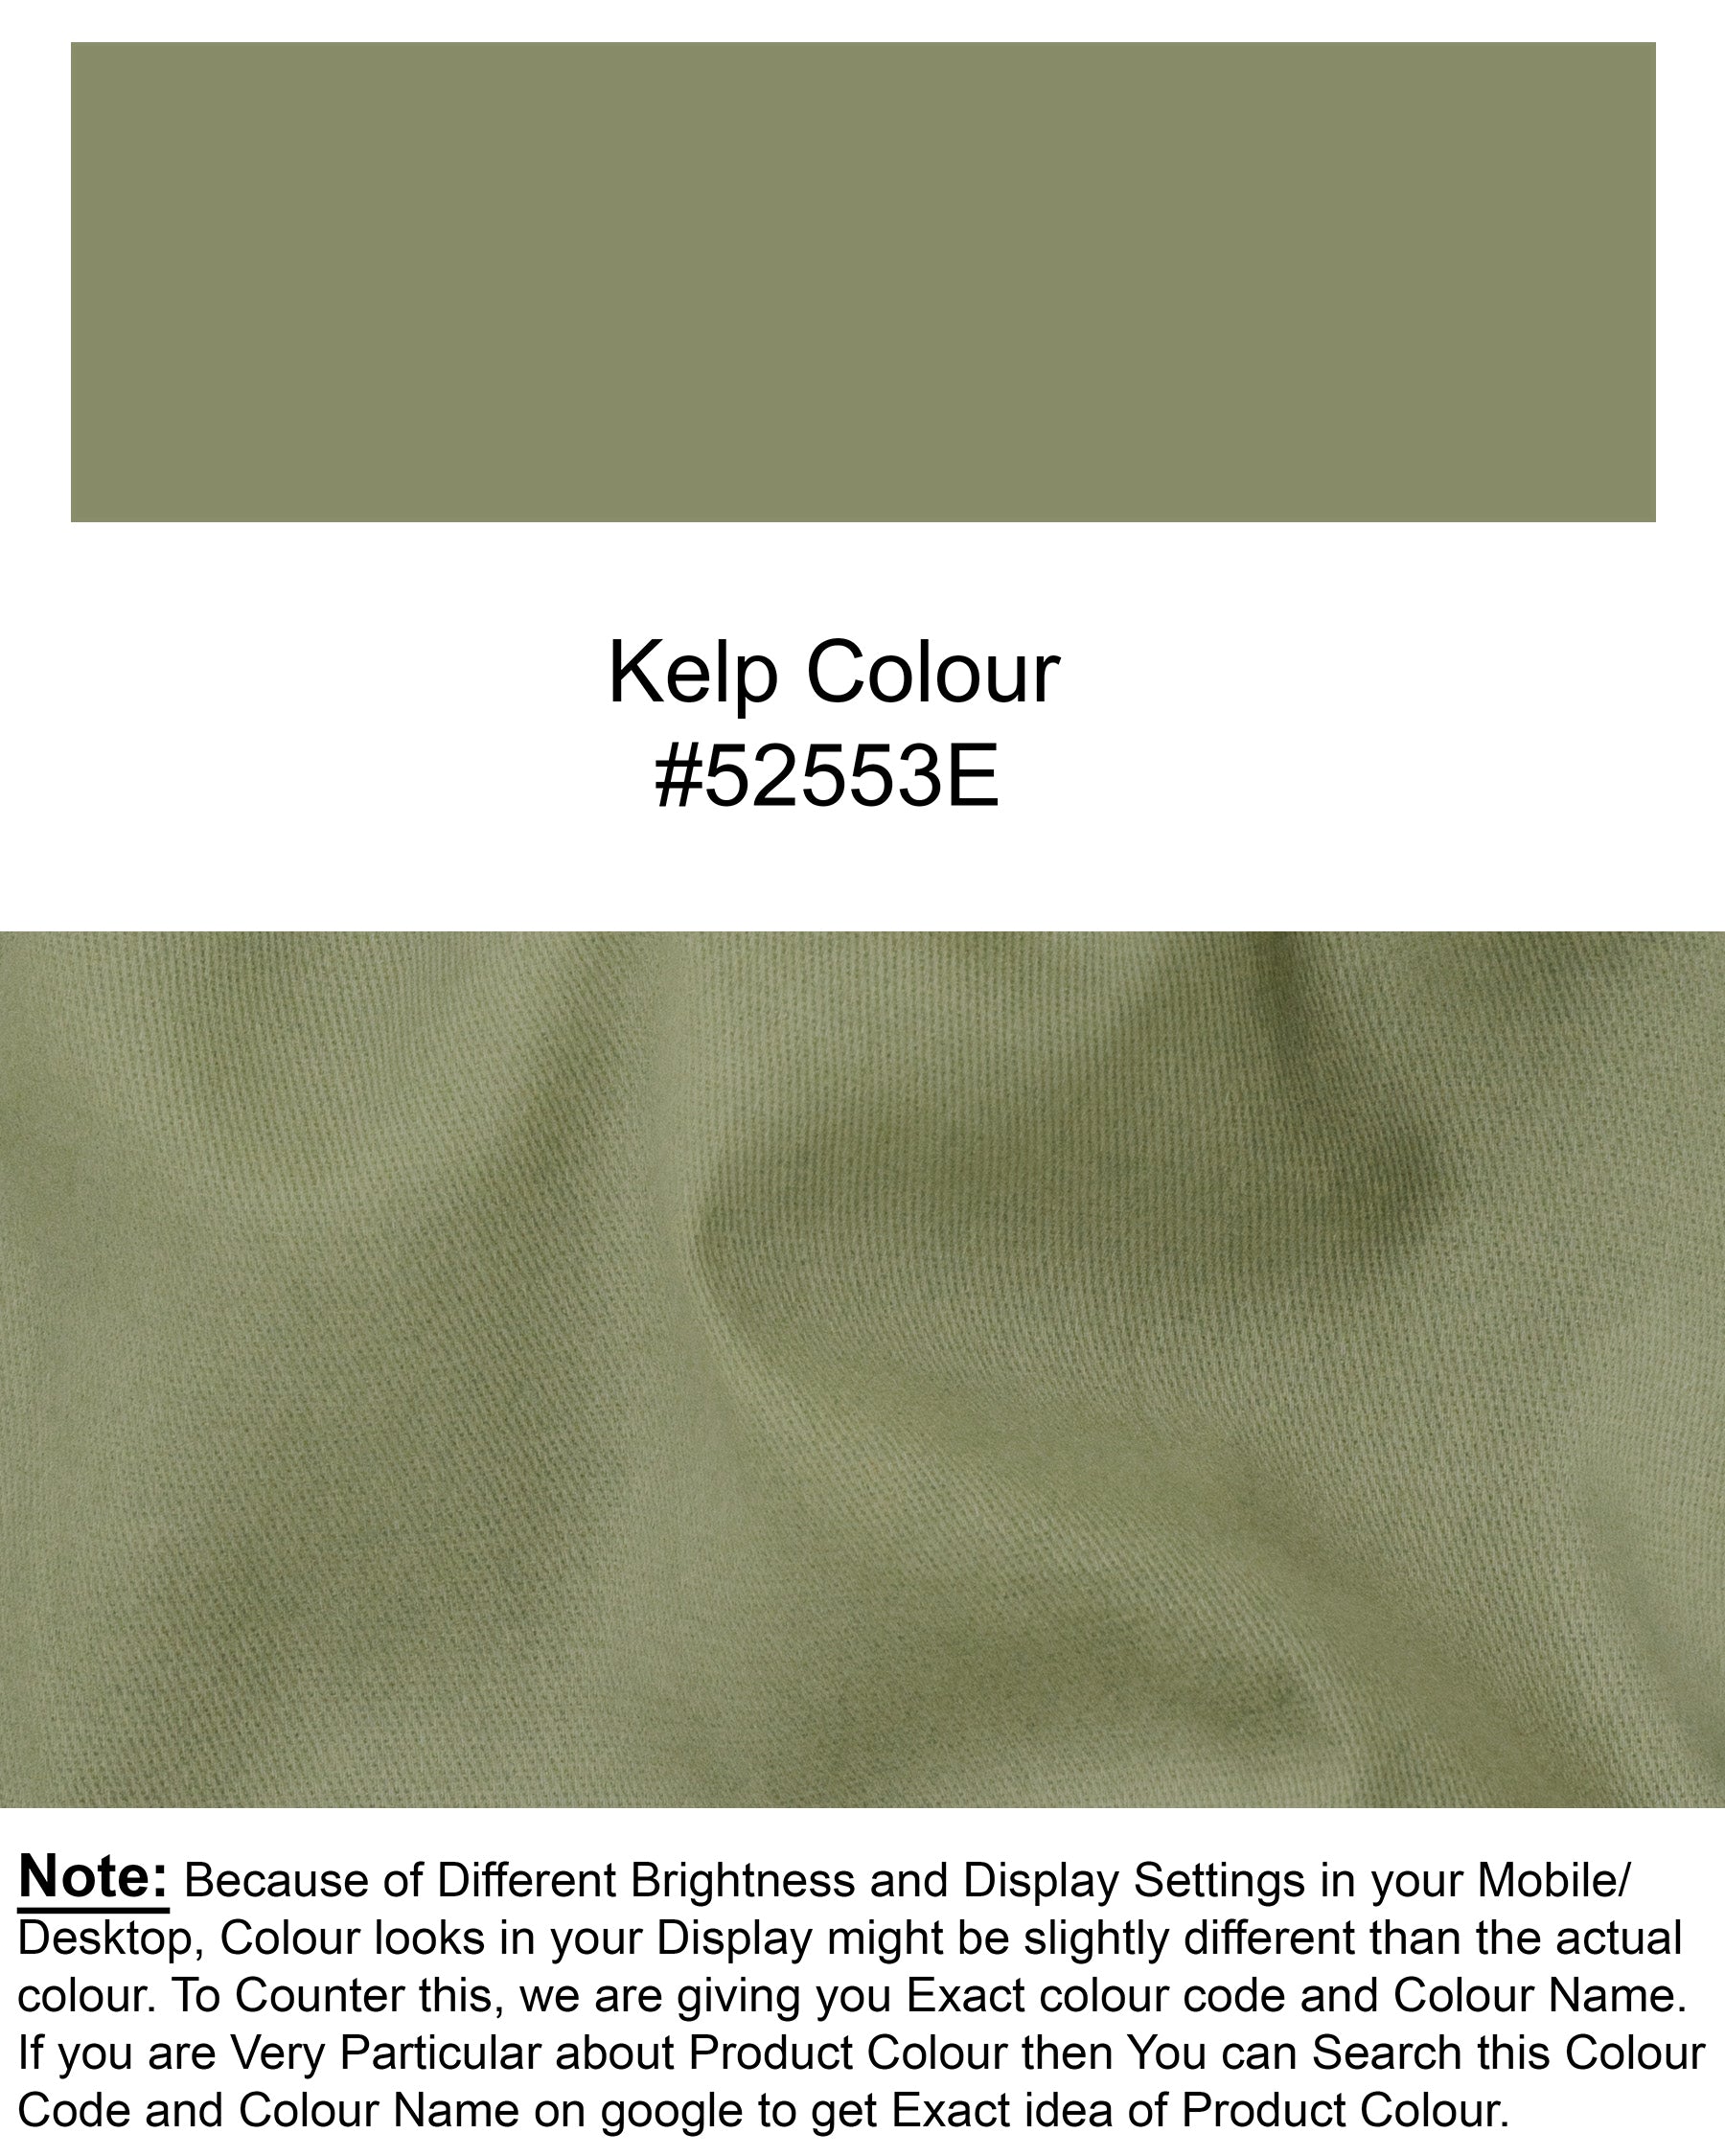 Kelp Green Heavyweight Double-Breasted Premium Cotton Blazer BL1374-DB-36, BL1374-DB-38, BL1374-DB-40, BL1374-DB-42, BL1374-DB-44, BL1374-DB-46, BL1374-DB-48, BL1374-DB-50, BL1374-DB-52, BL1374-DB-54, BL1374-DB-56, BL1374-DB-58, BL1374-DB-60